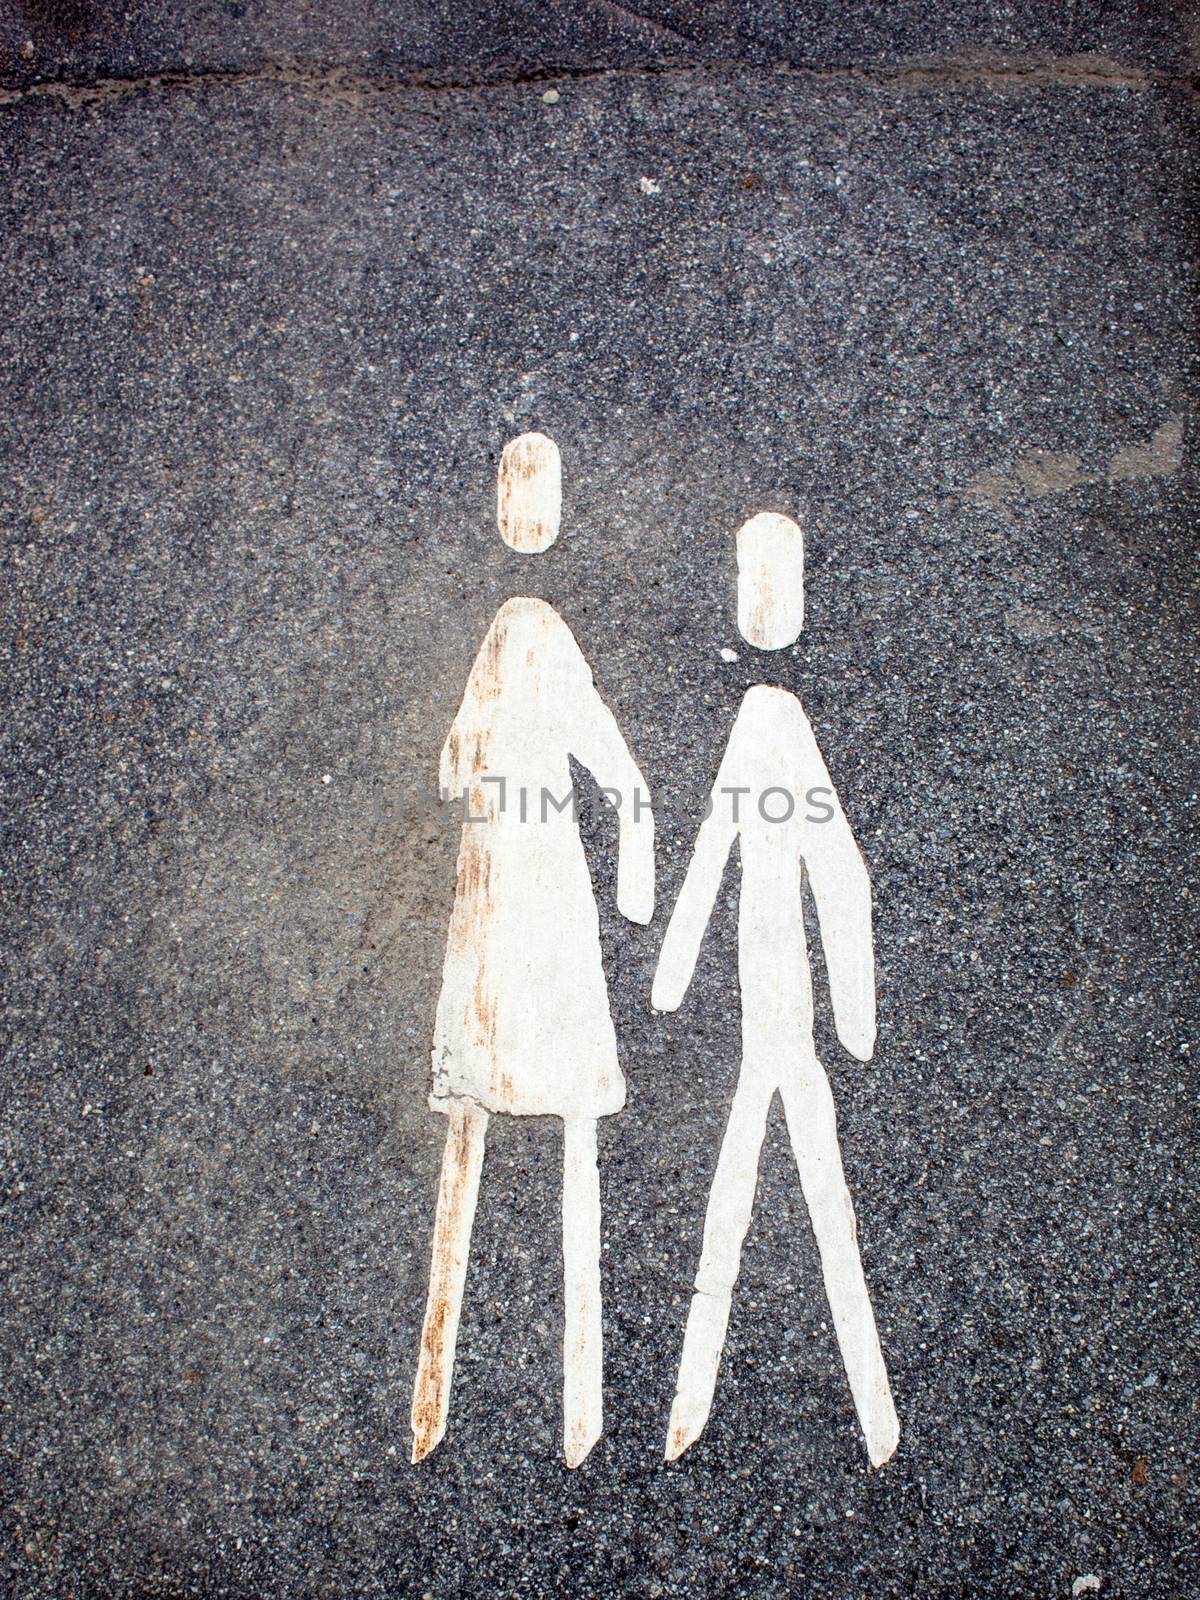 Pedestrian sign by Digifoodstock